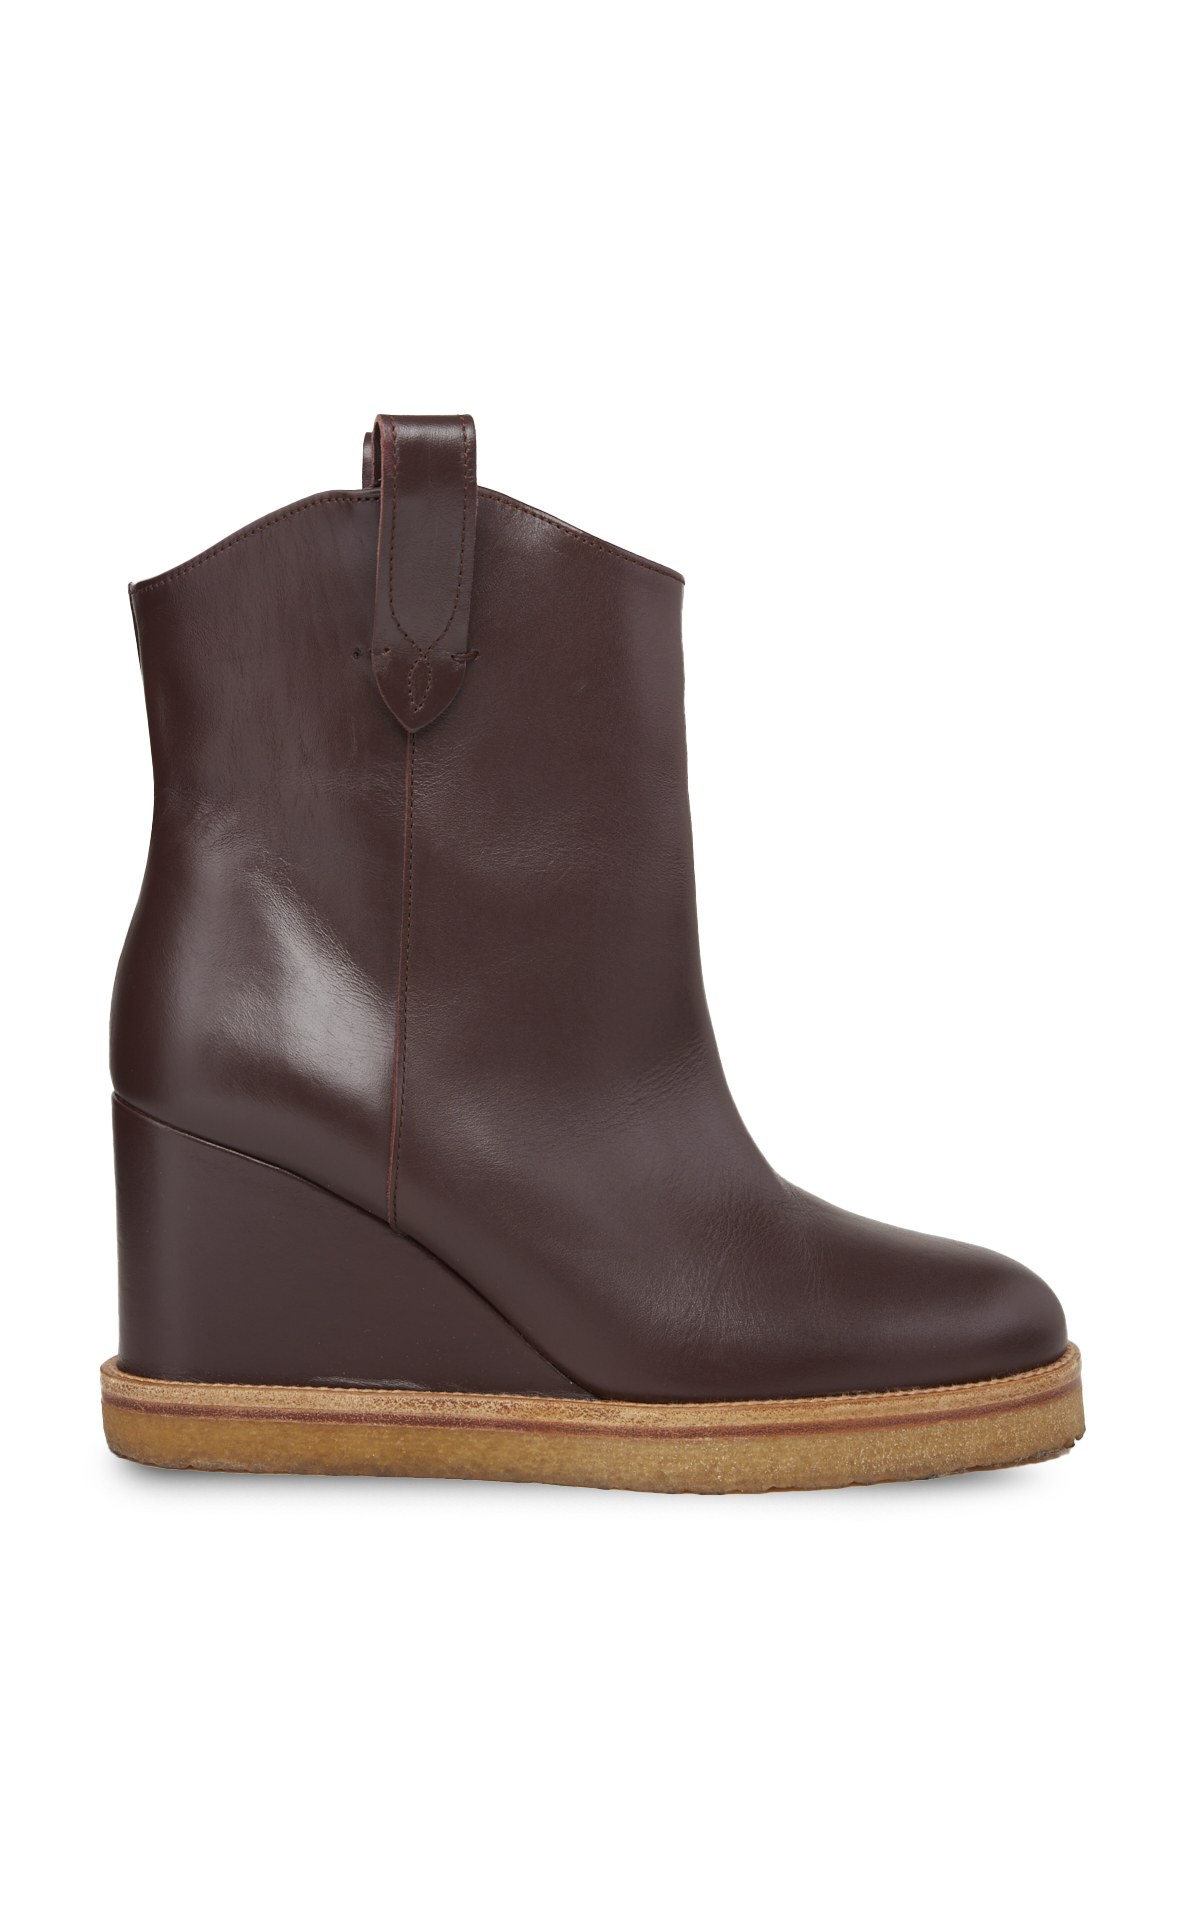 Burgundy leather platform boots* 